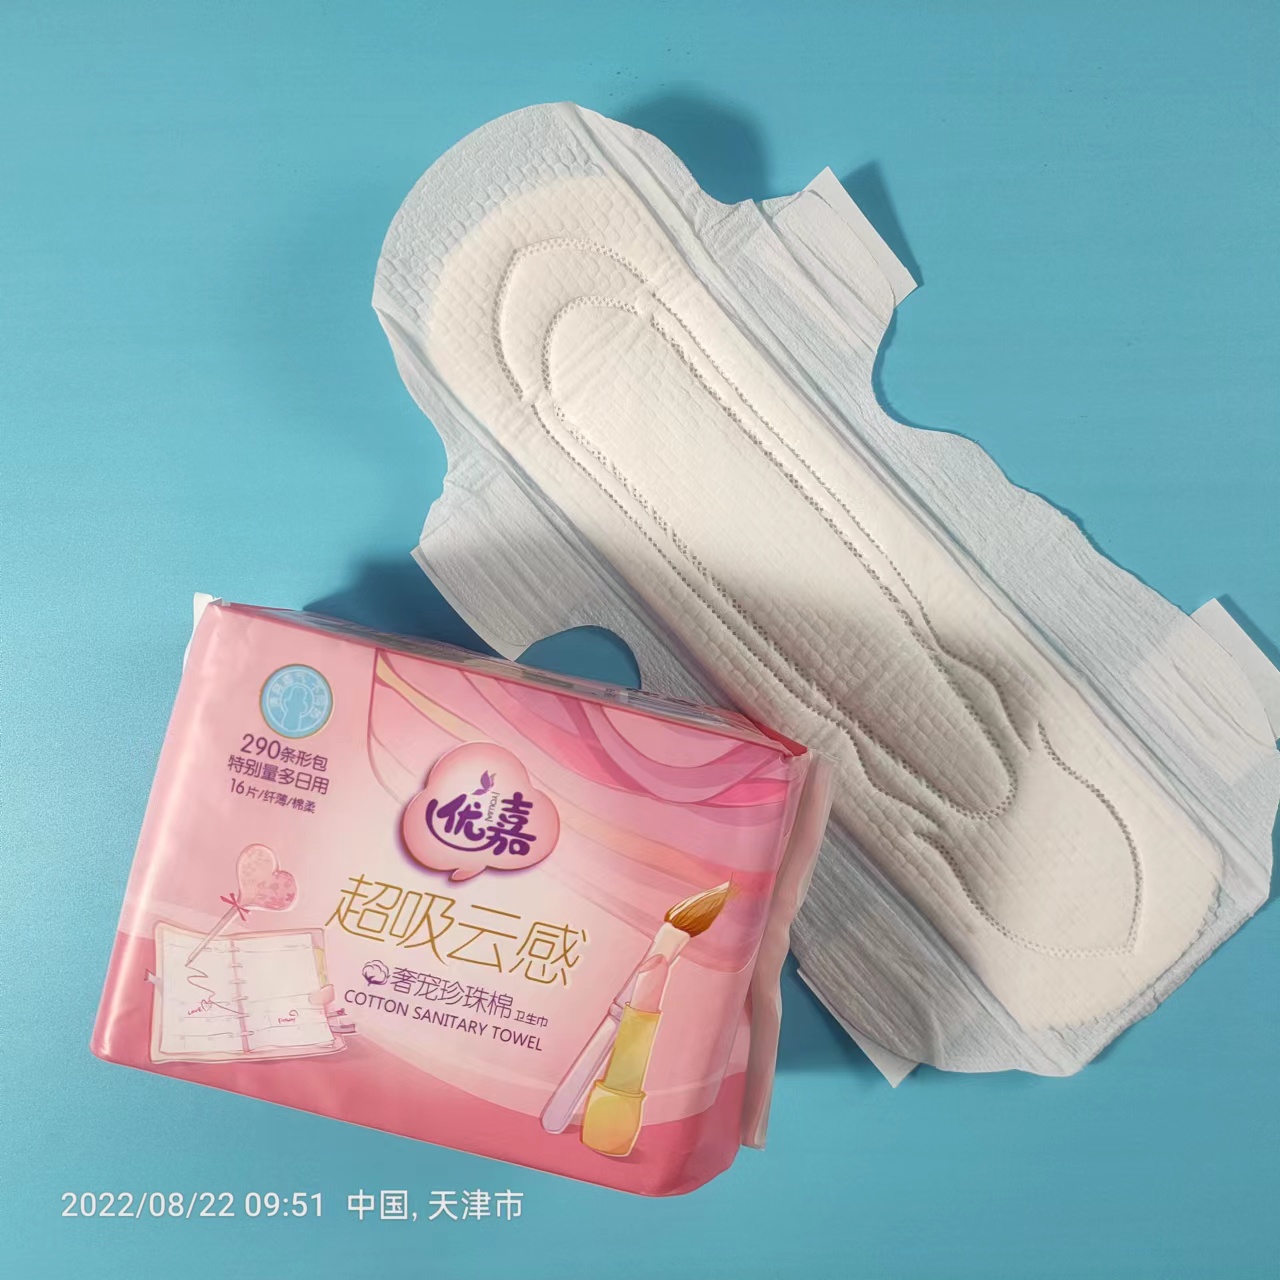 Hotsale hurtownia damskich podpasek higienicznych marka OEM podpaska higieniczna ekonomiczna super chłonna dziewczyna podpaska higieniczna